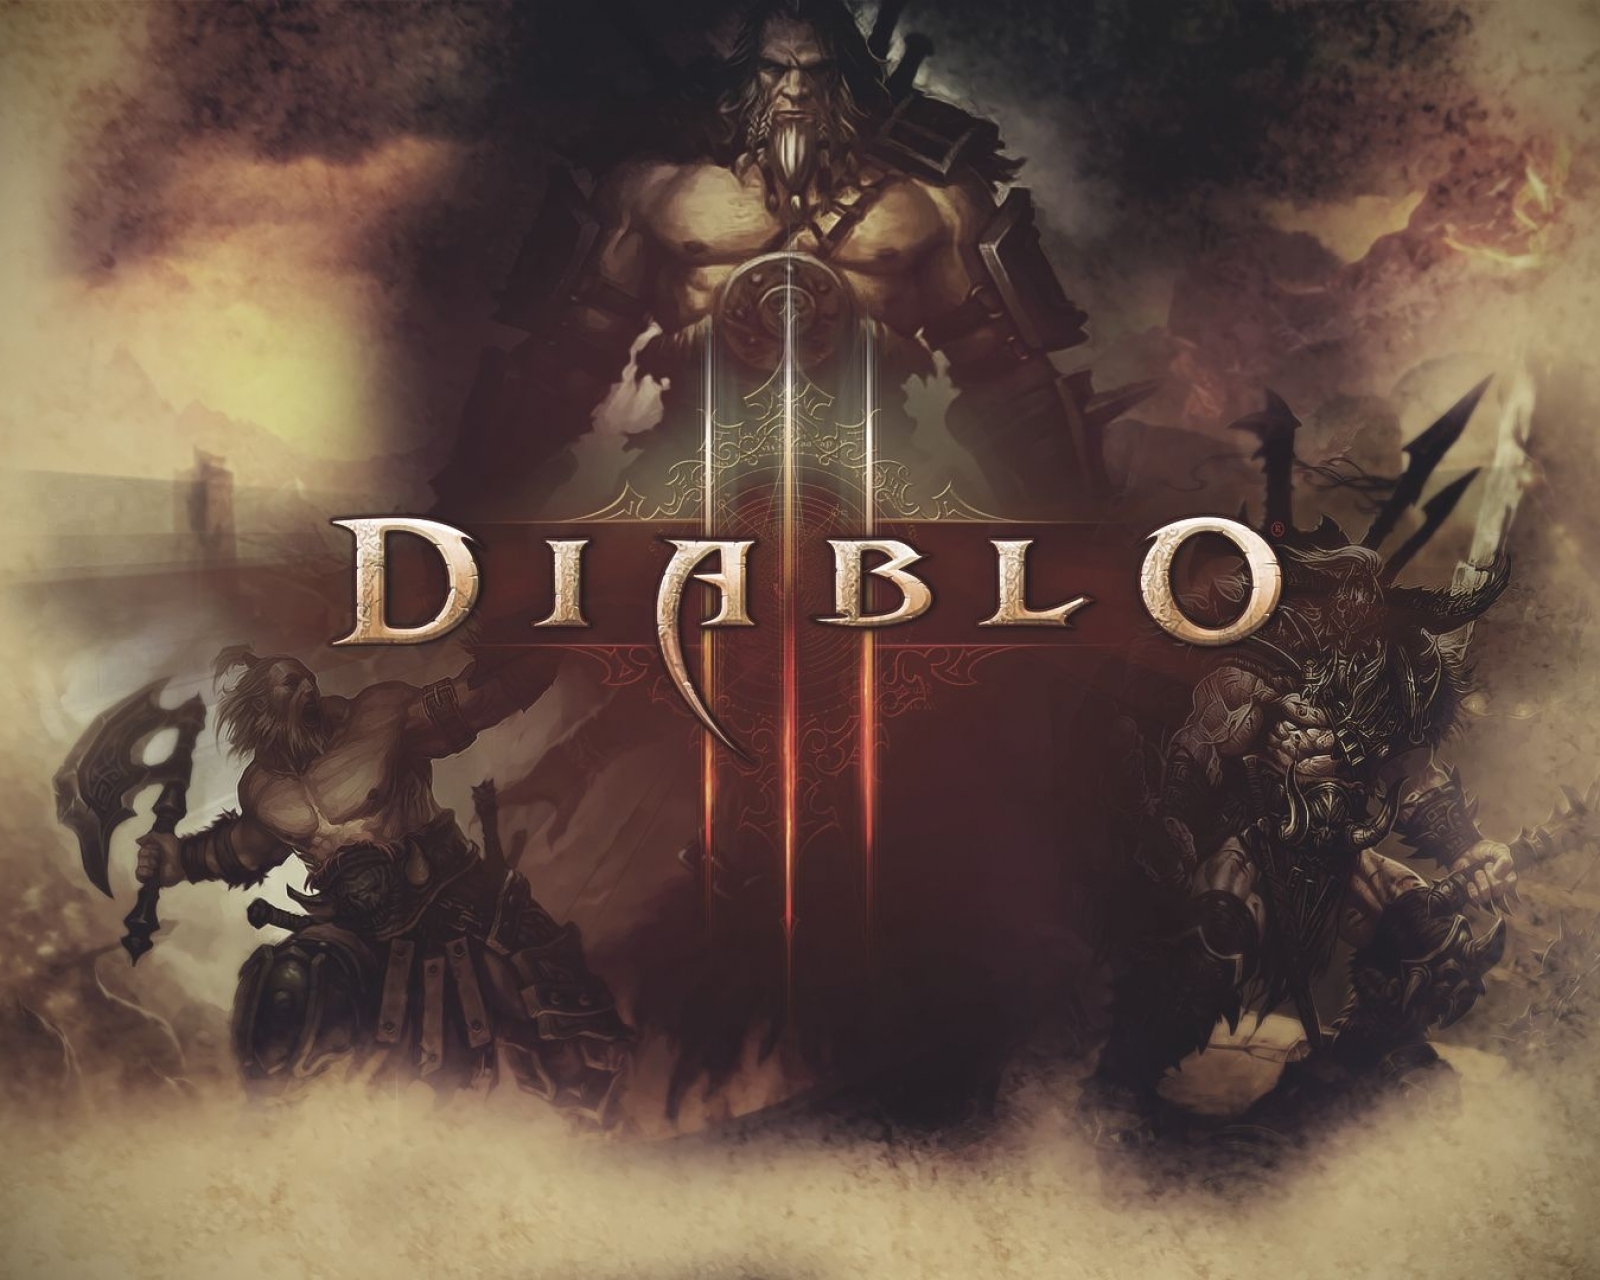 Baixe gratuitamente a imagem Diablo, Videogame, Diablo Iii, Bárbaro (Diablo Iii) na área de trabalho do seu PC